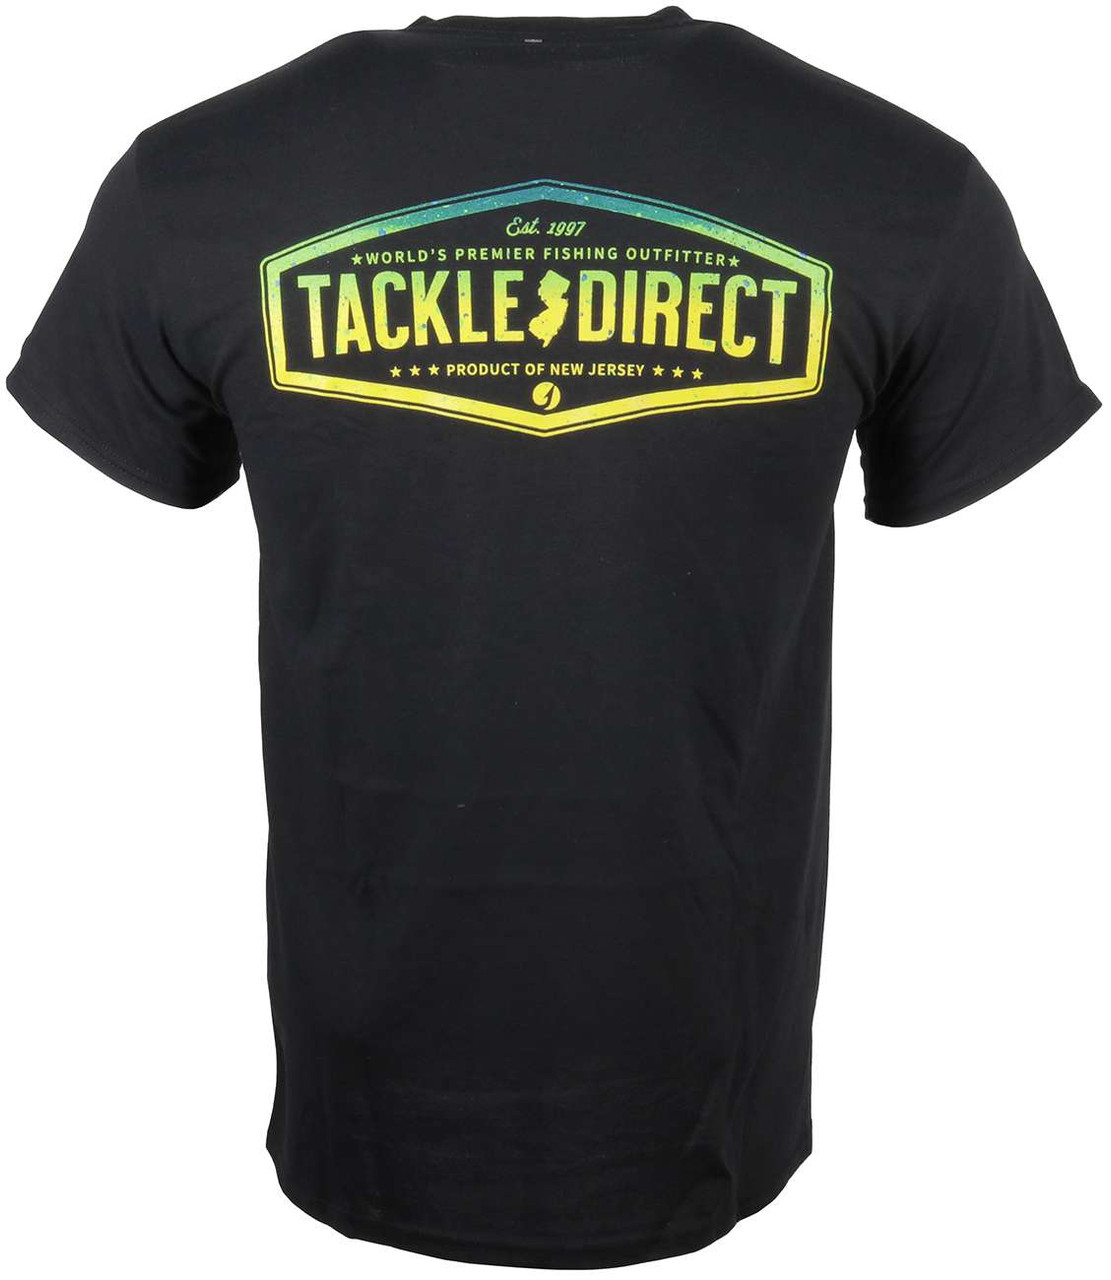 TackleDirect Dorado Badge Short Sleeve T-Shirts